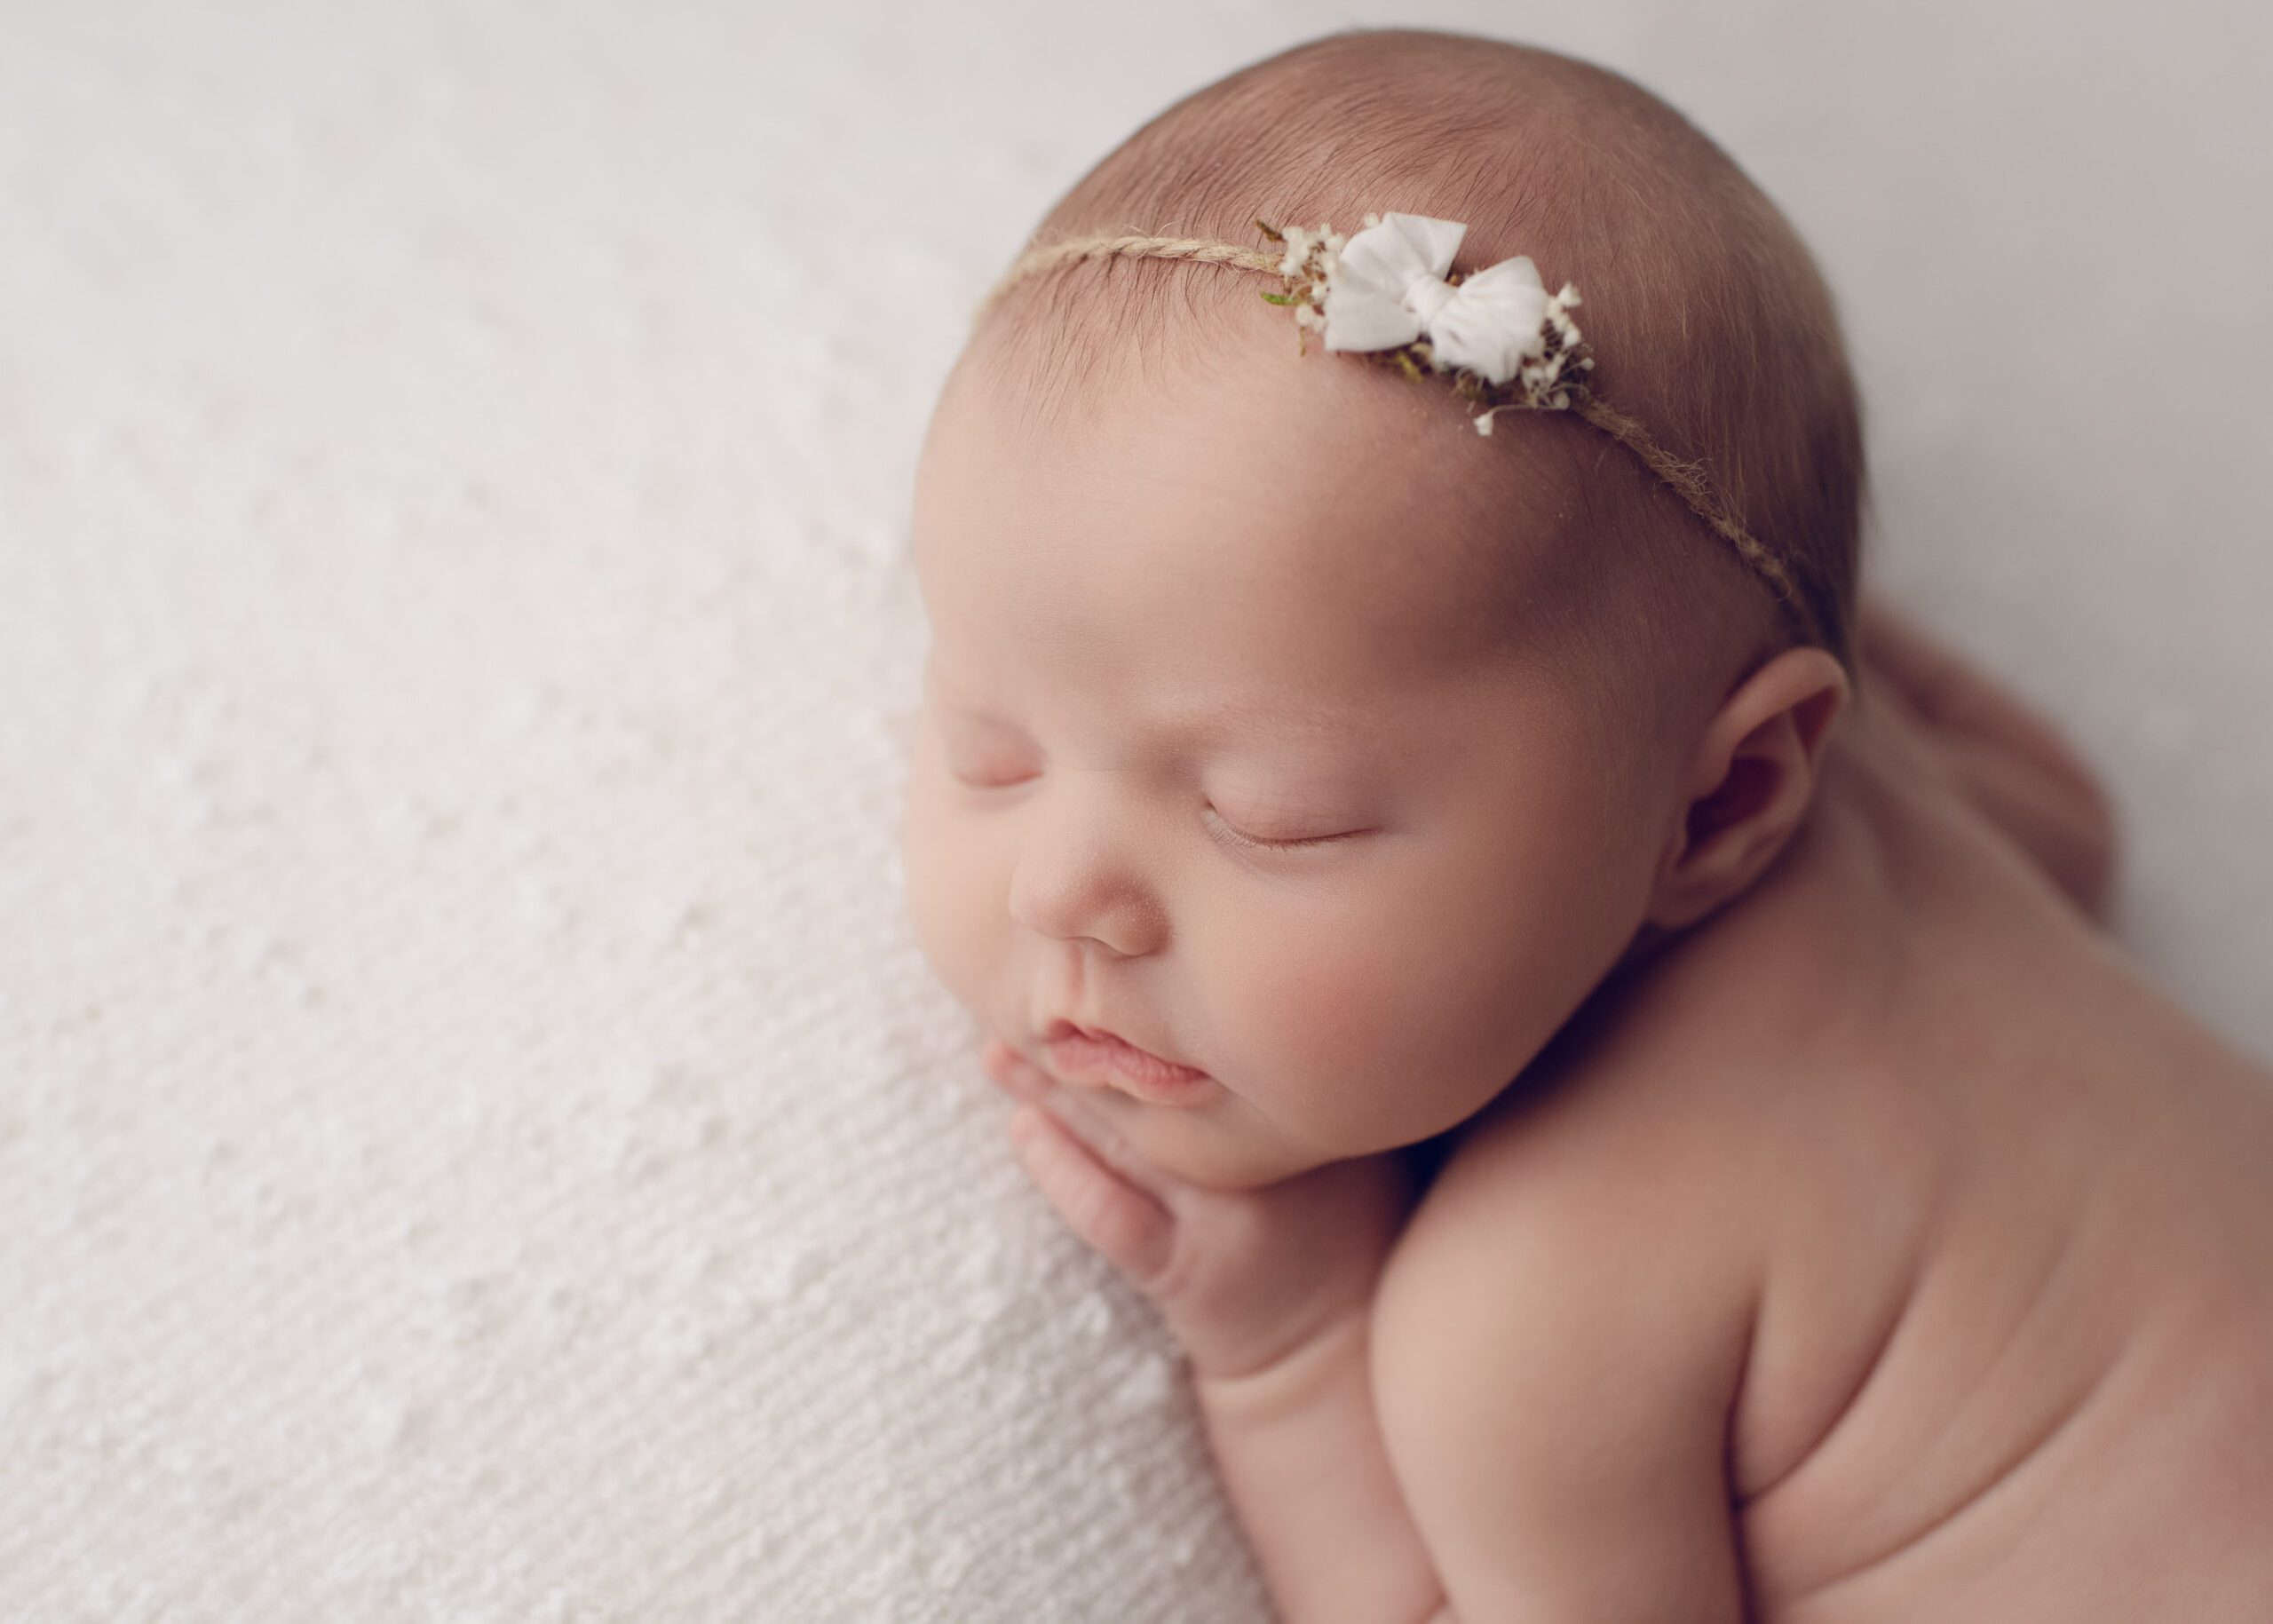 newborn baby laying asleep on white blanket - newborn photography by Molly Carlsen in Birmingham AL